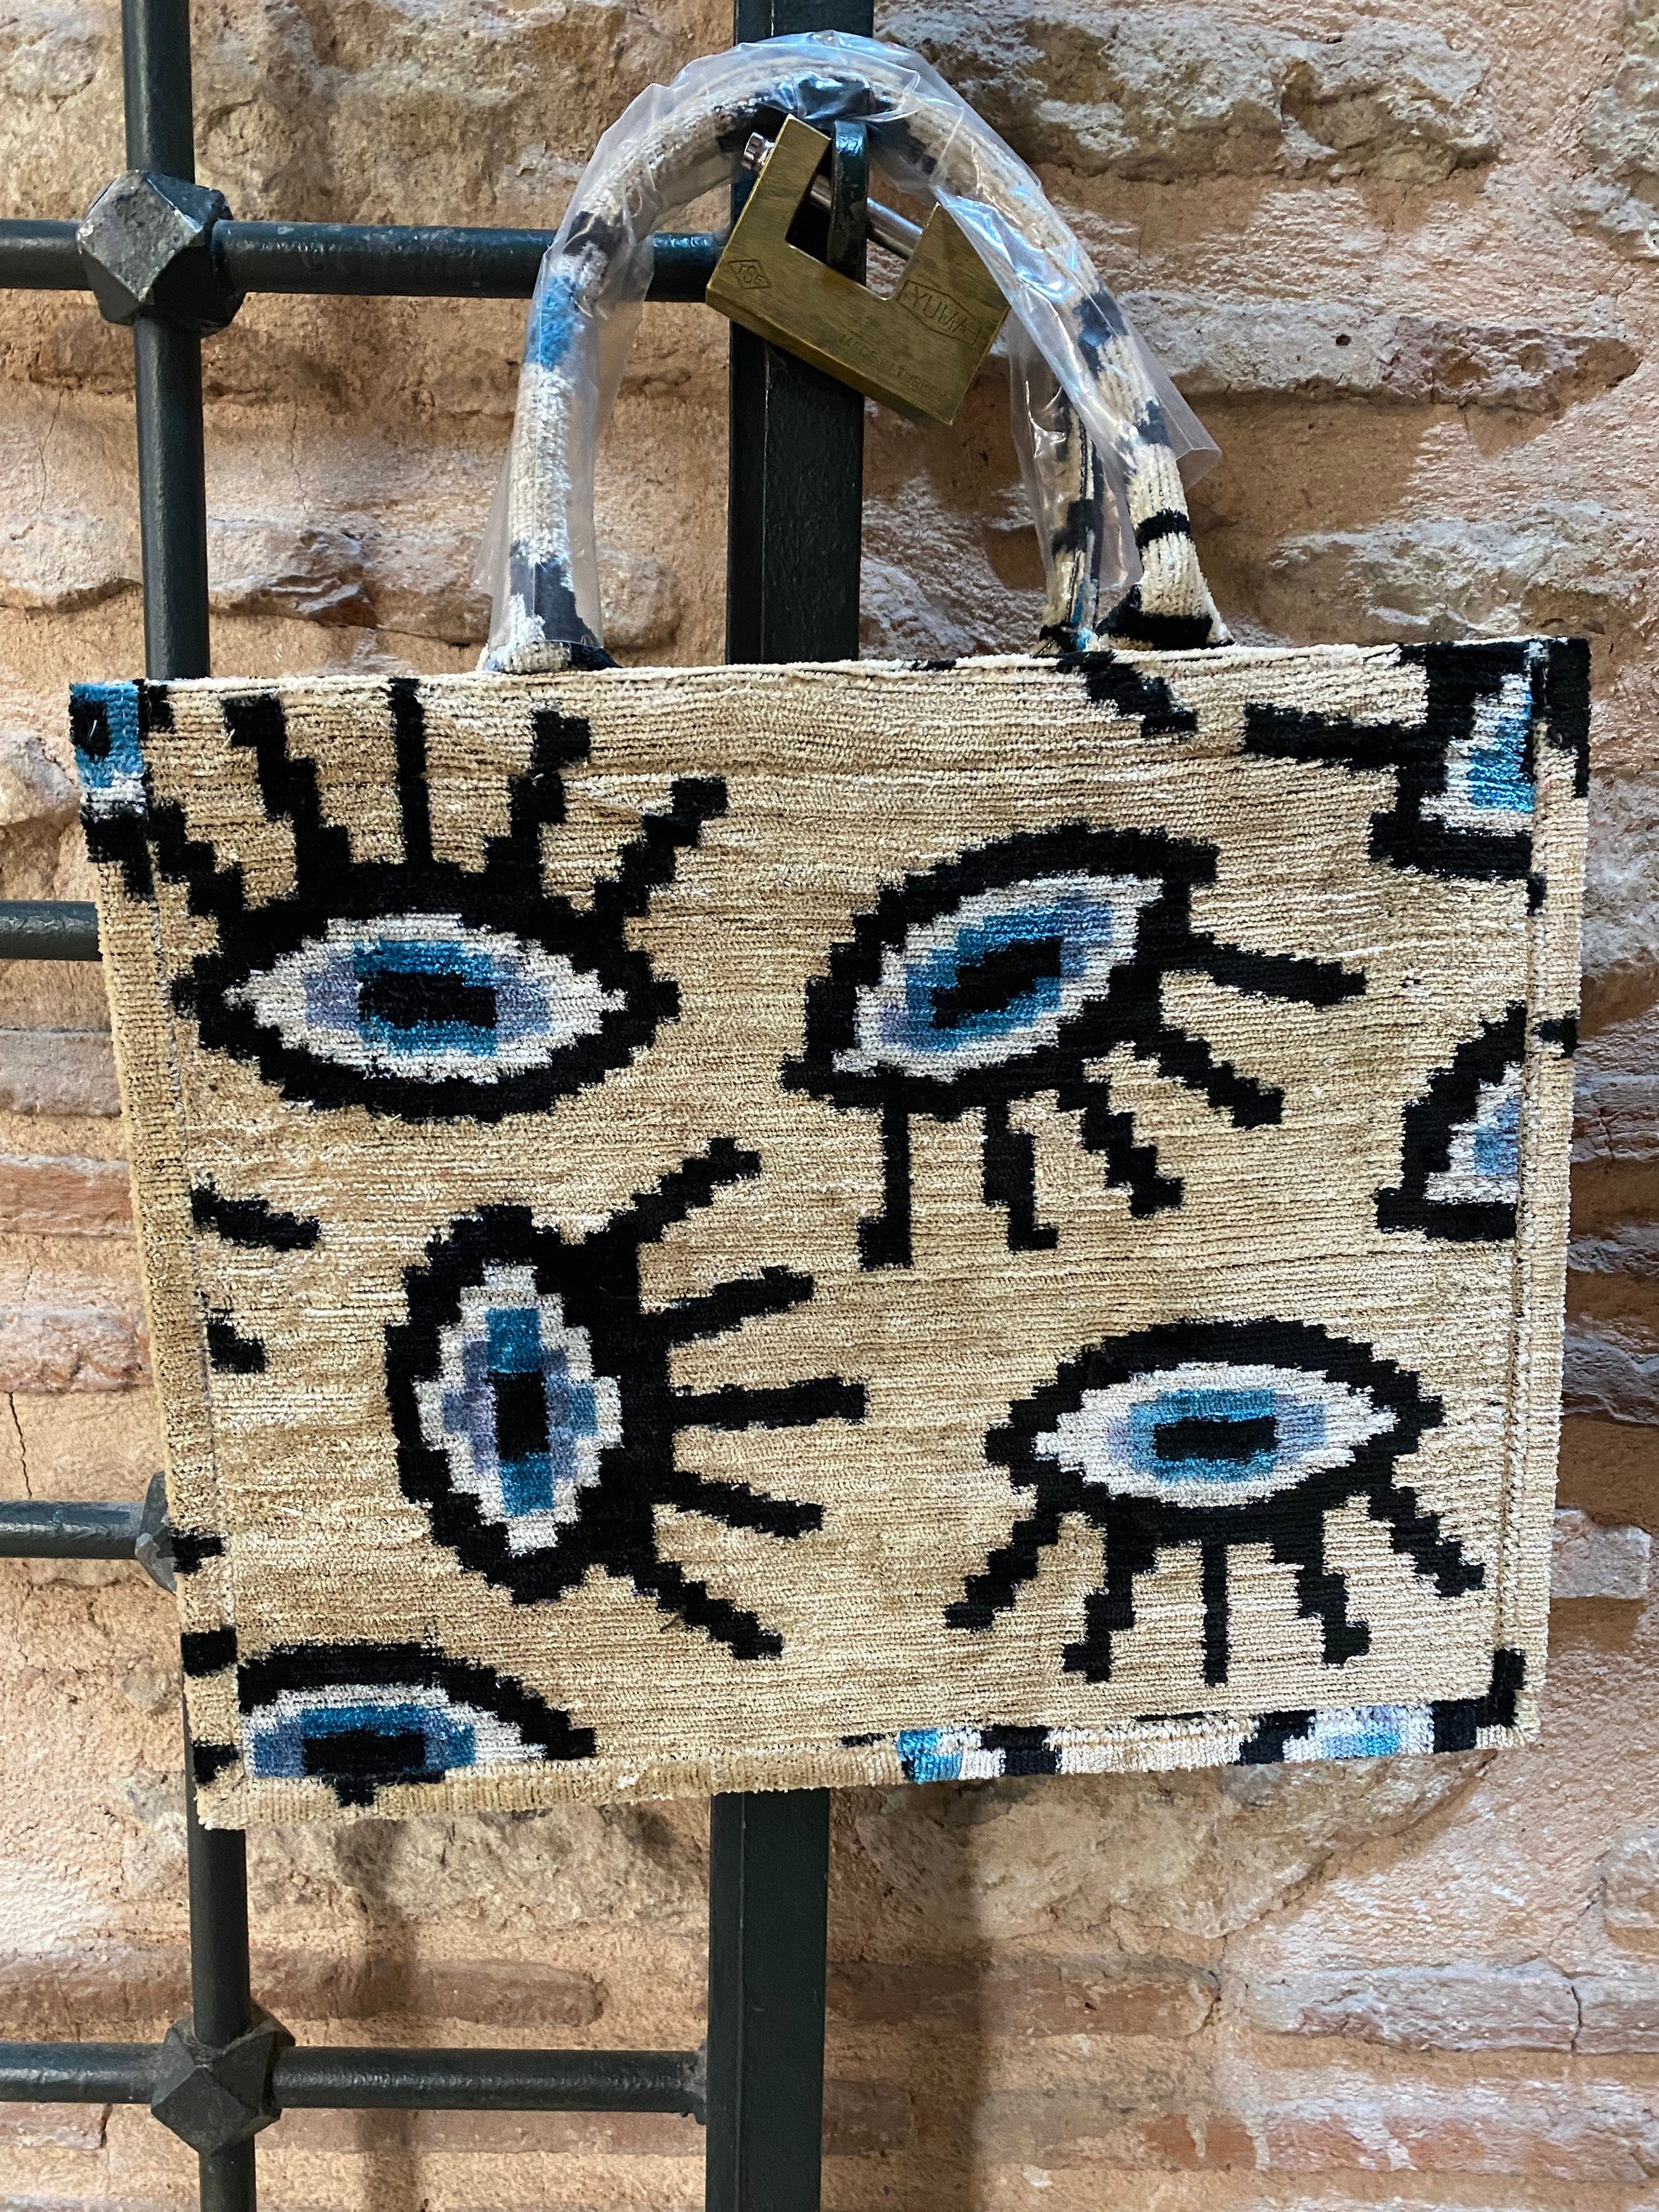 Art Unique Designer Eye Hand Embroidery Tote